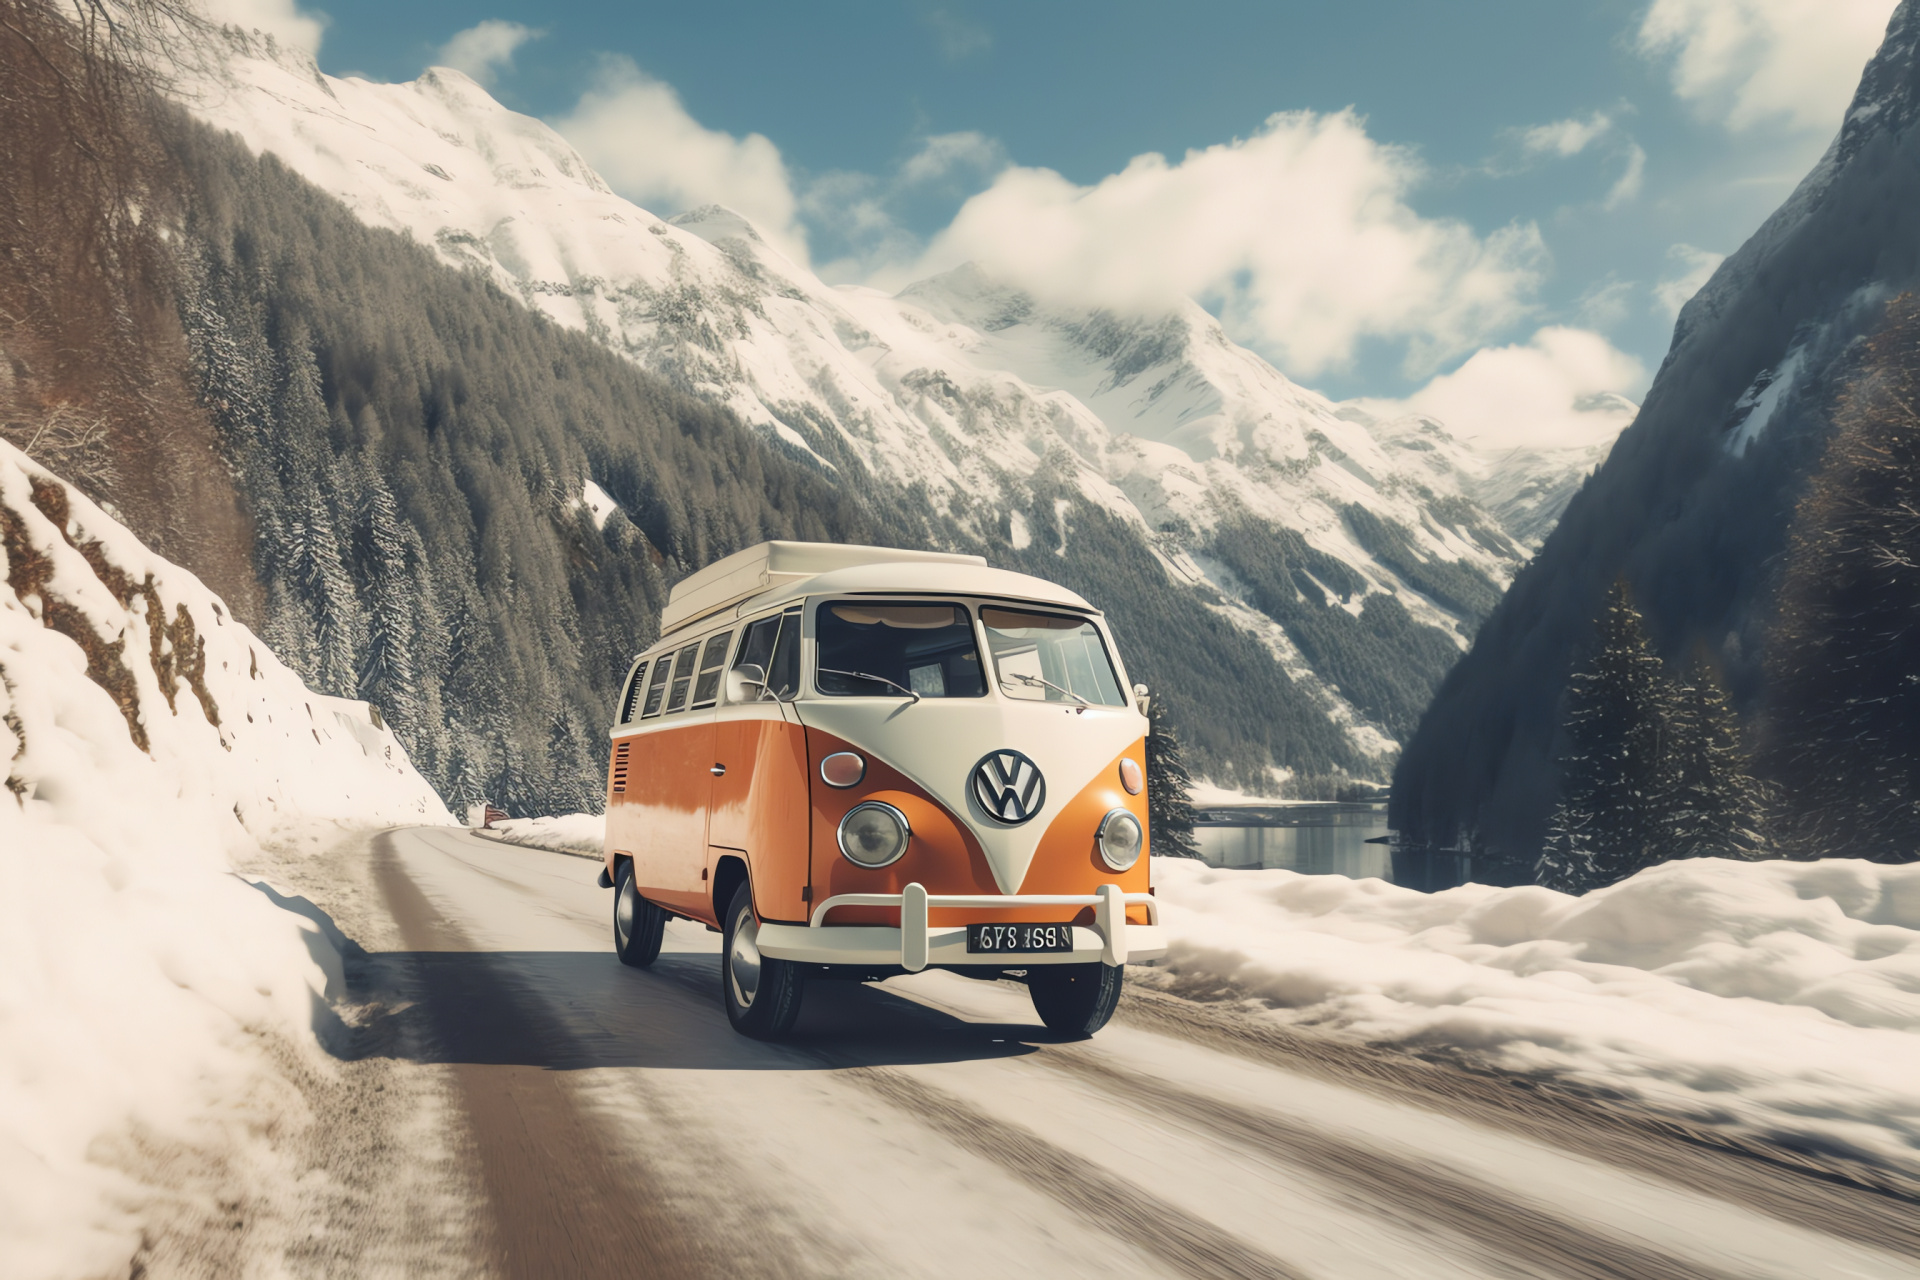 Winterized VW Bus, Alpine Swiss travel, Snowy expedition, Chilly Alpine atmosphere, Winter sport transport, HD Desktop Wallpaper